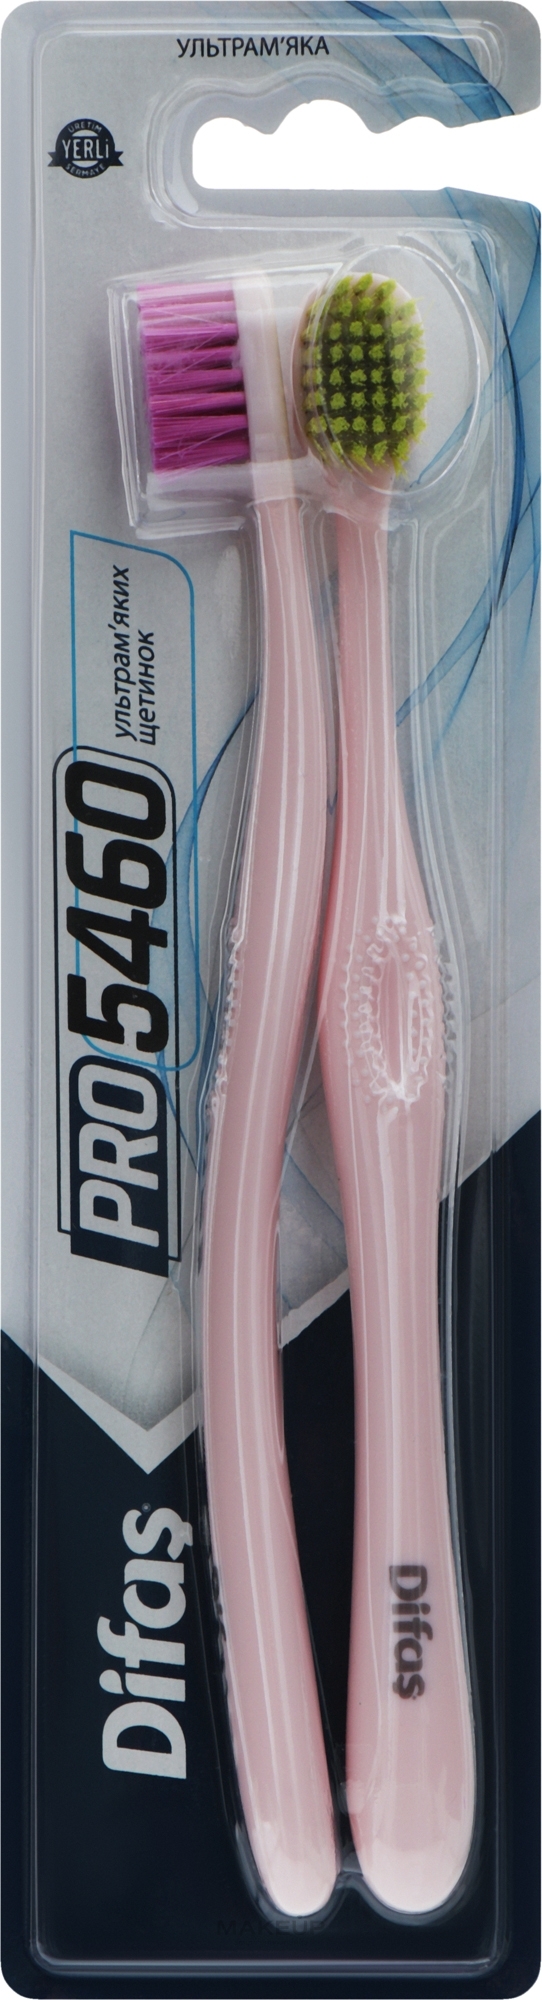 Набор зубных щеток "Ultra Soft", розовая + розовая - Difas PRO 5460 — фото 2шт